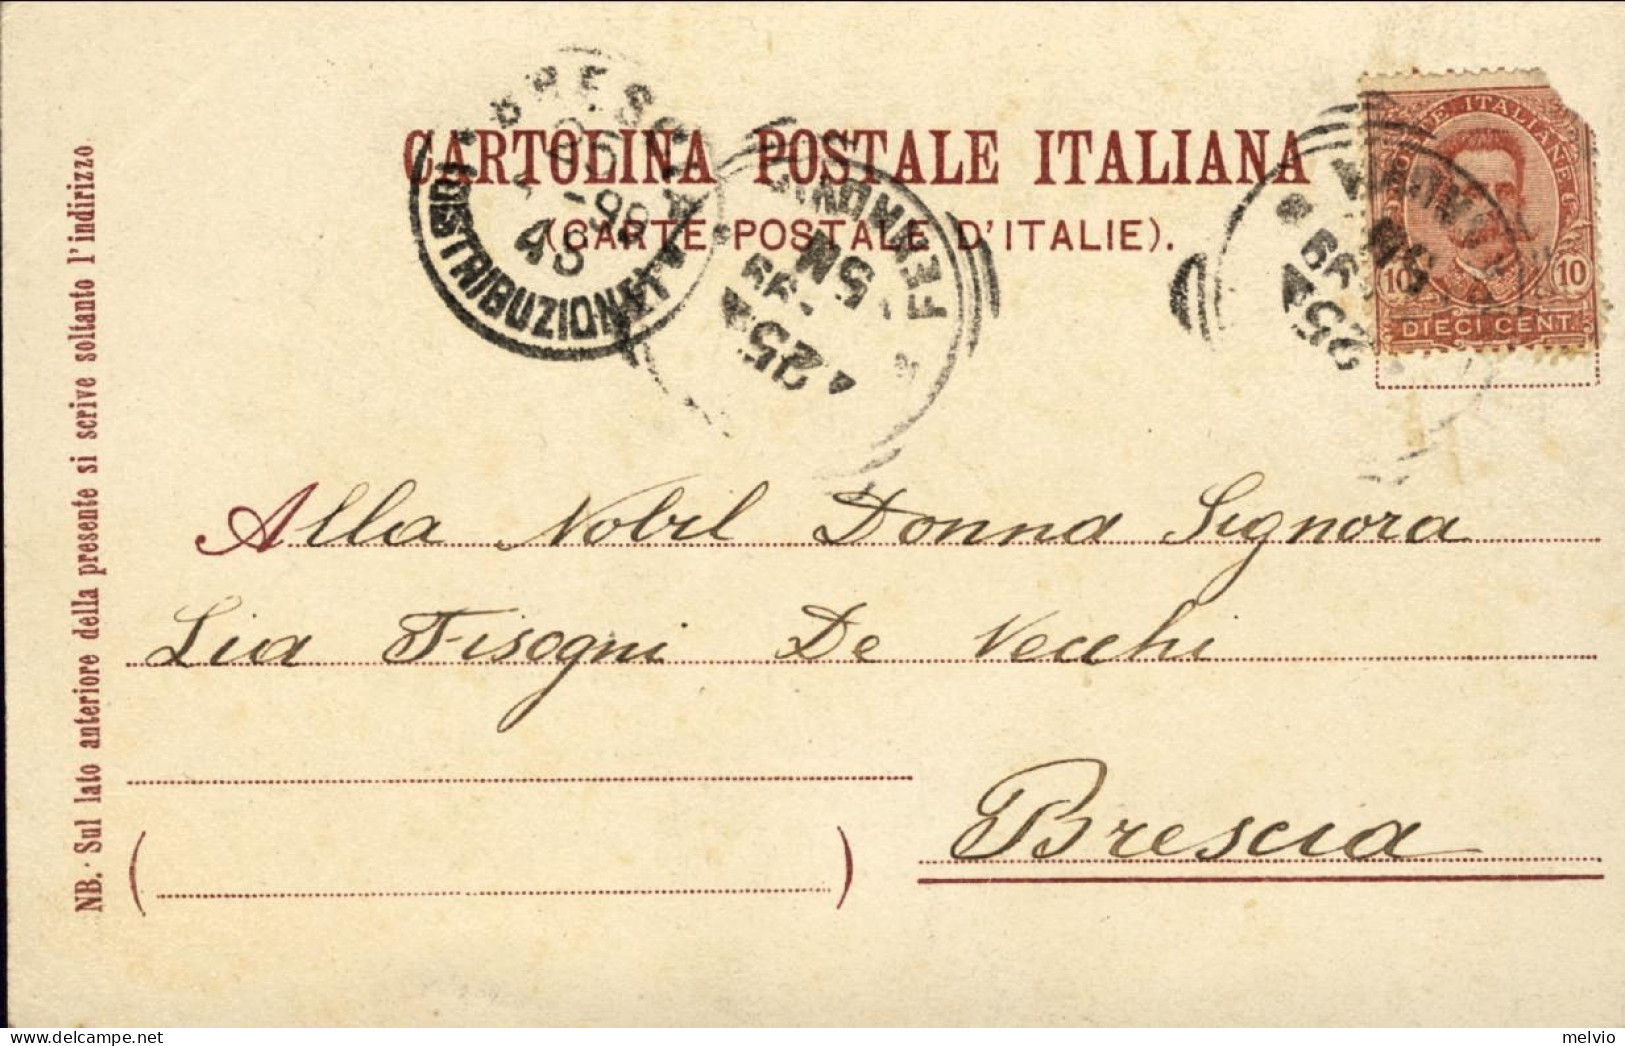 1898-Pisa Casa Ove Nacque Galileo, Cartolina Viaggiata - Pisa